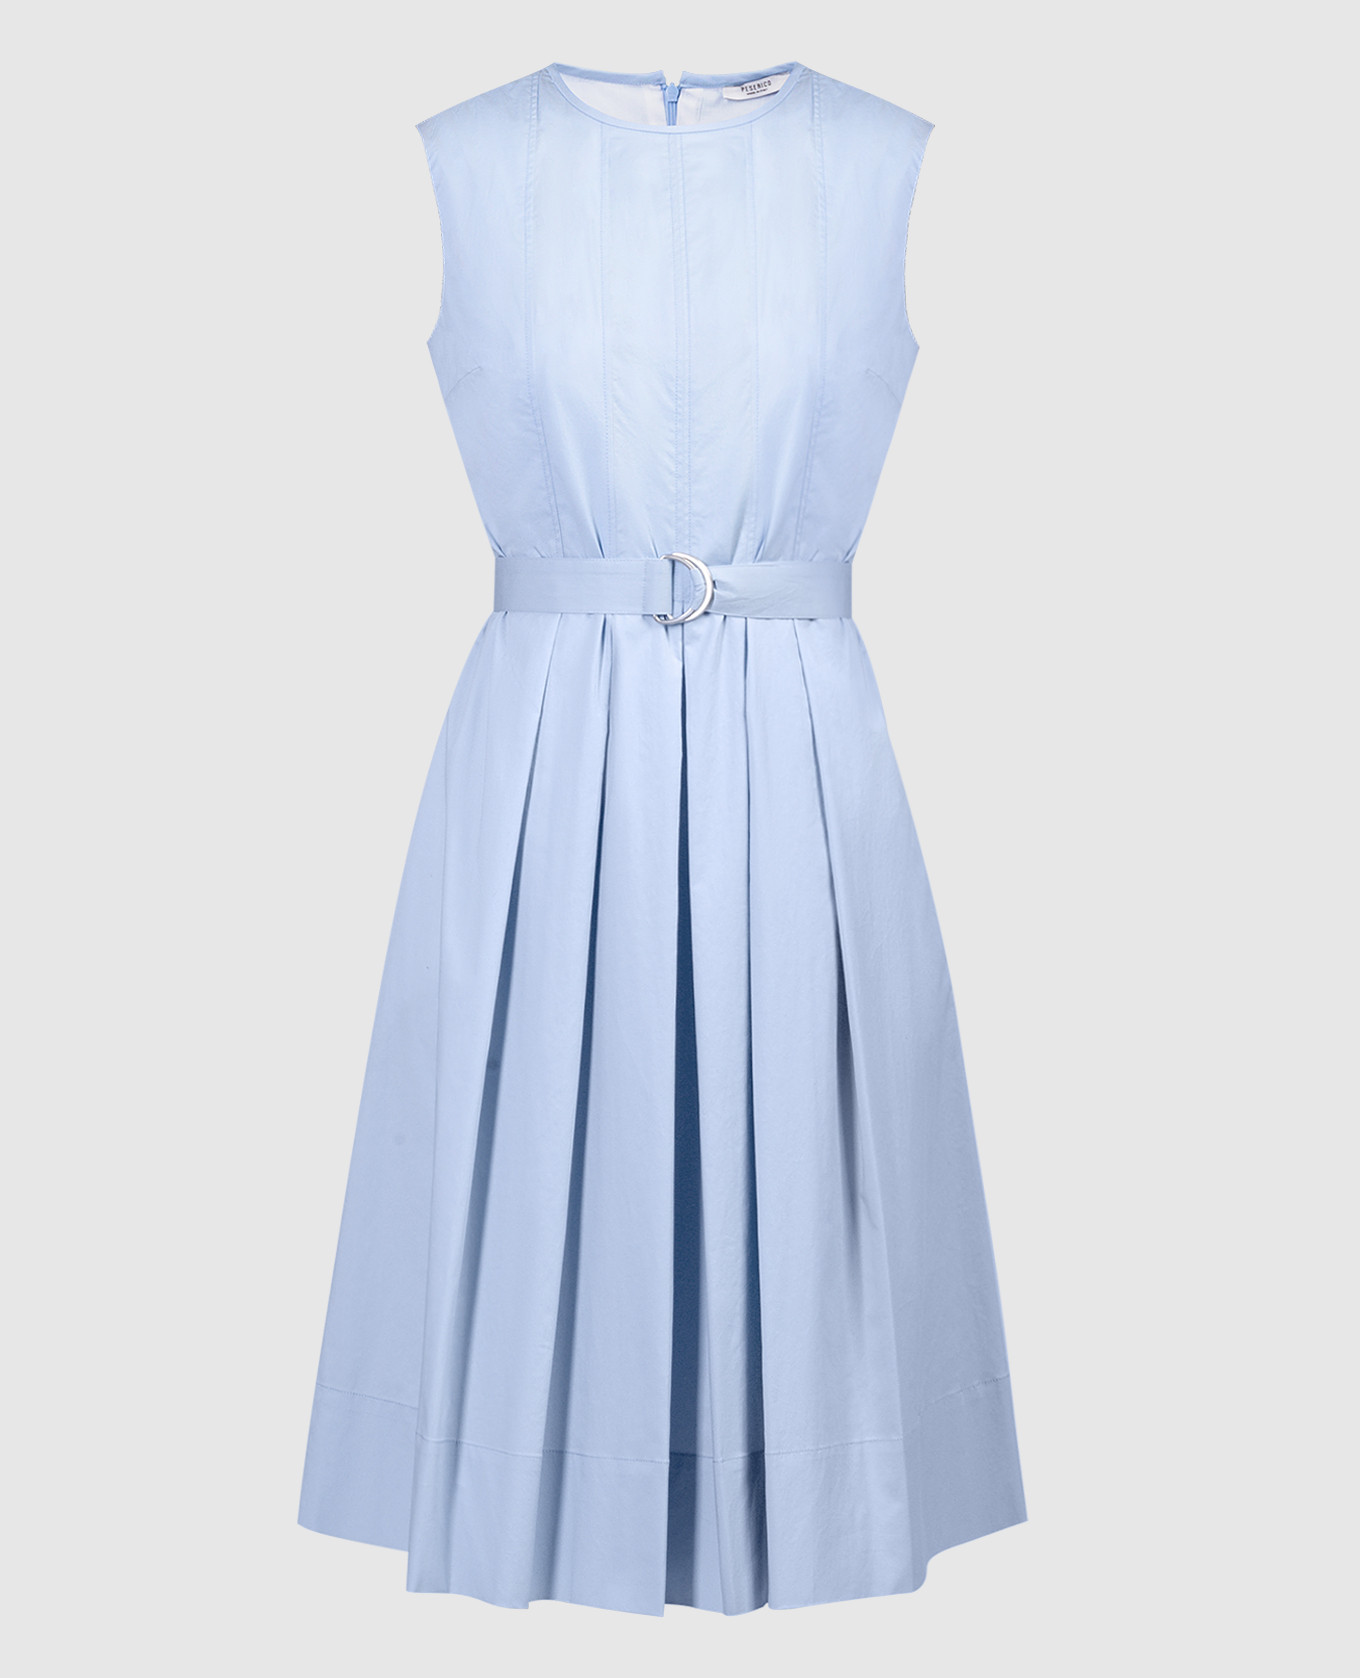 Blue dress with drapery